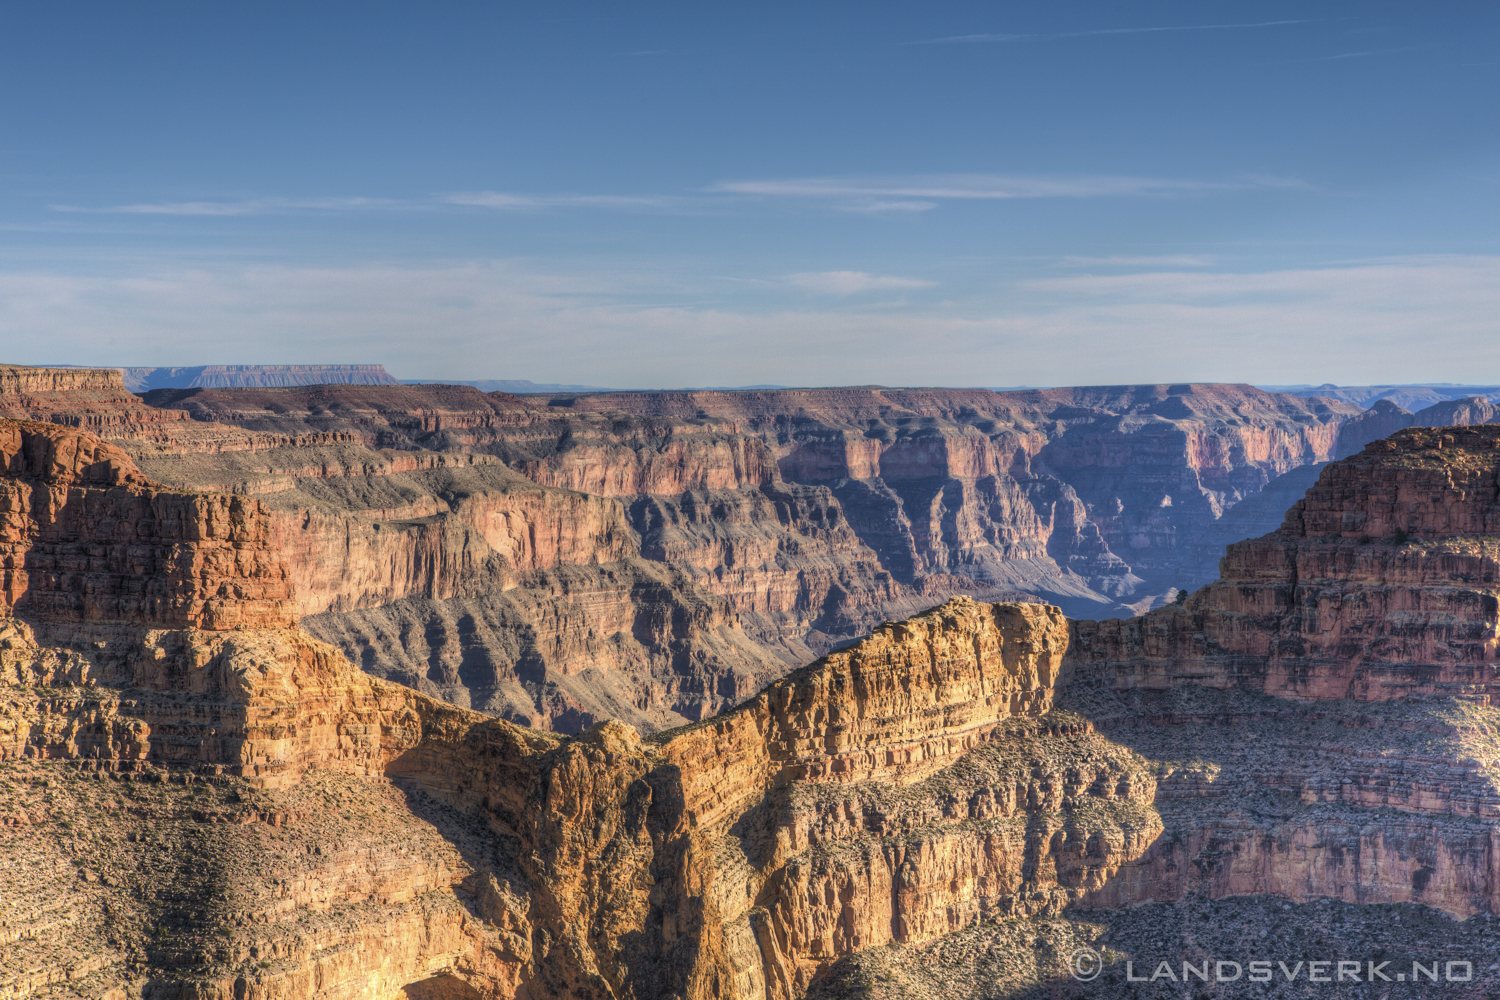 Grand Canyon, Arizona. 

(Canon EOS 5D Mark III / Canon EF 24-70mm f/2.8 L USM)